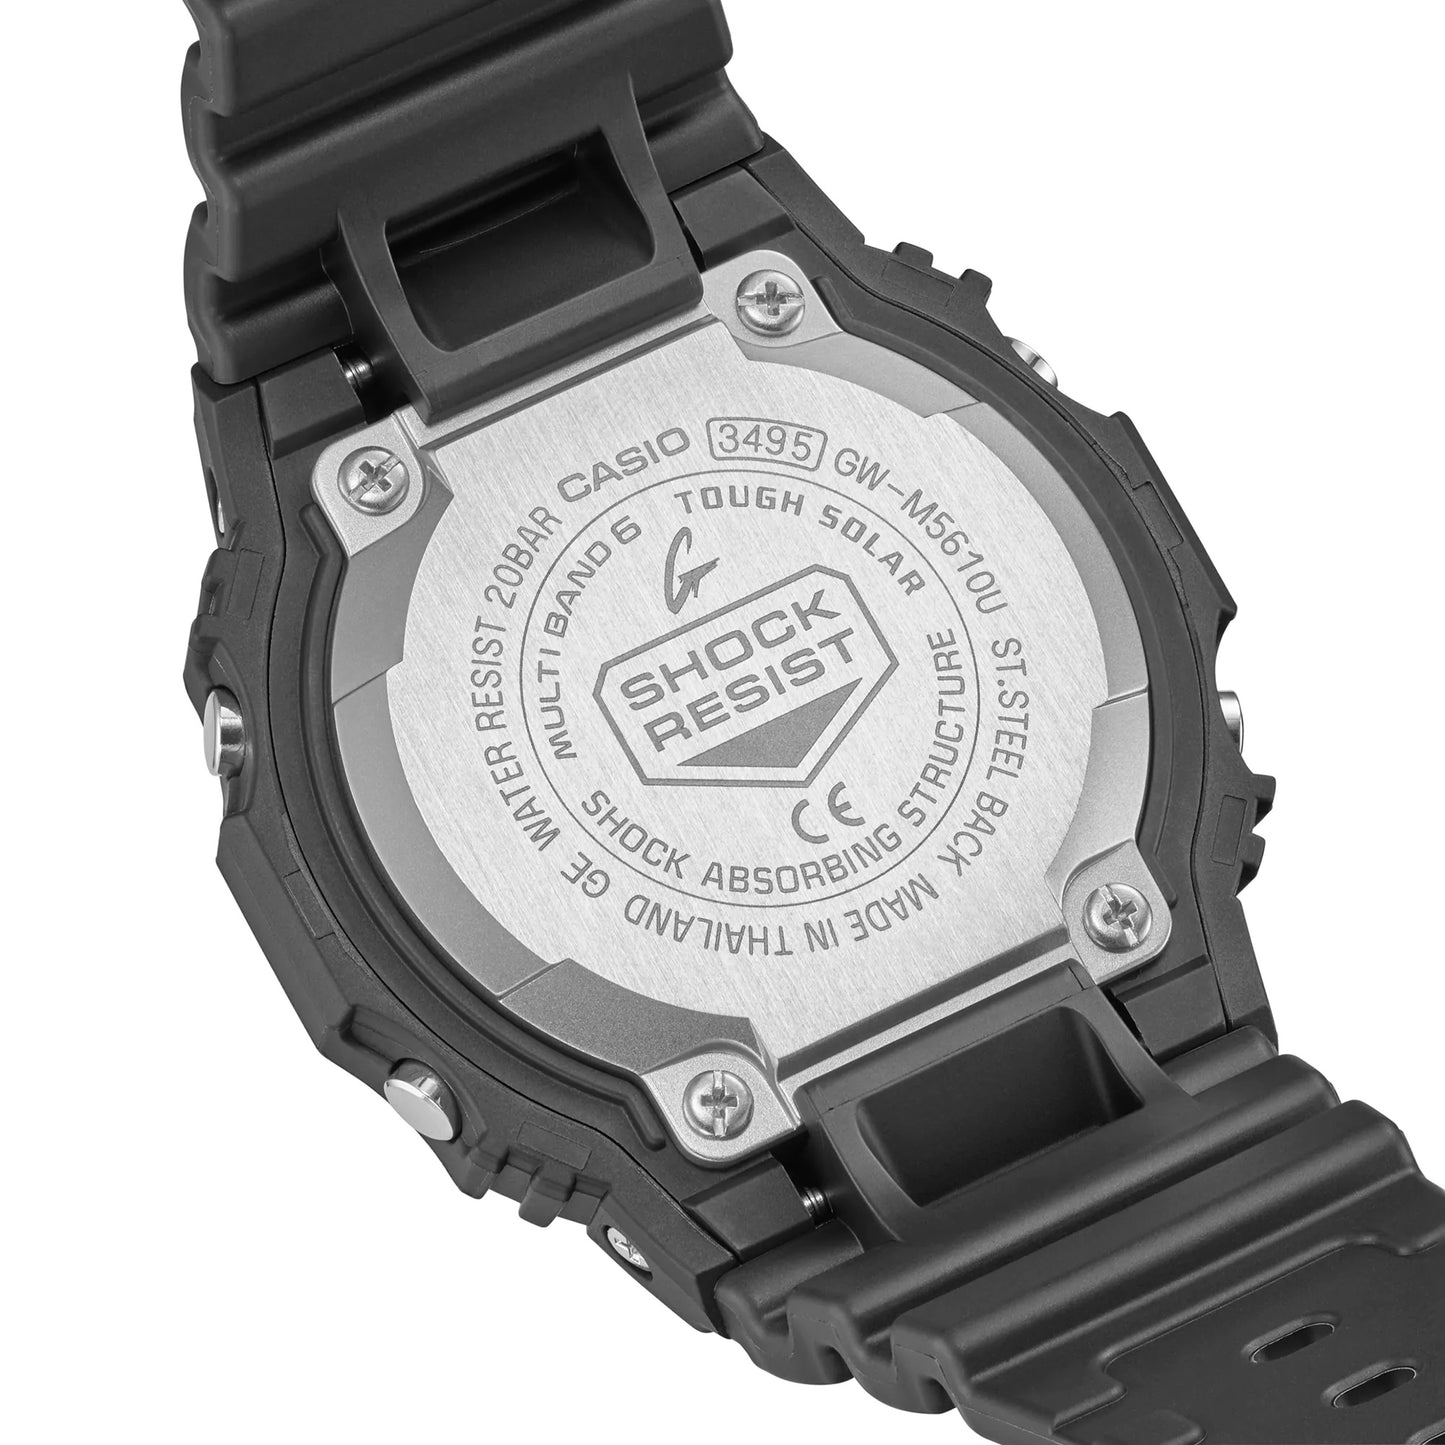 G-SHOCK 国内正規品 カシオ Gショック 腕時計 メンズ タフソーラー シリーズ 樹脂バンド GW-M5610U-1BJF